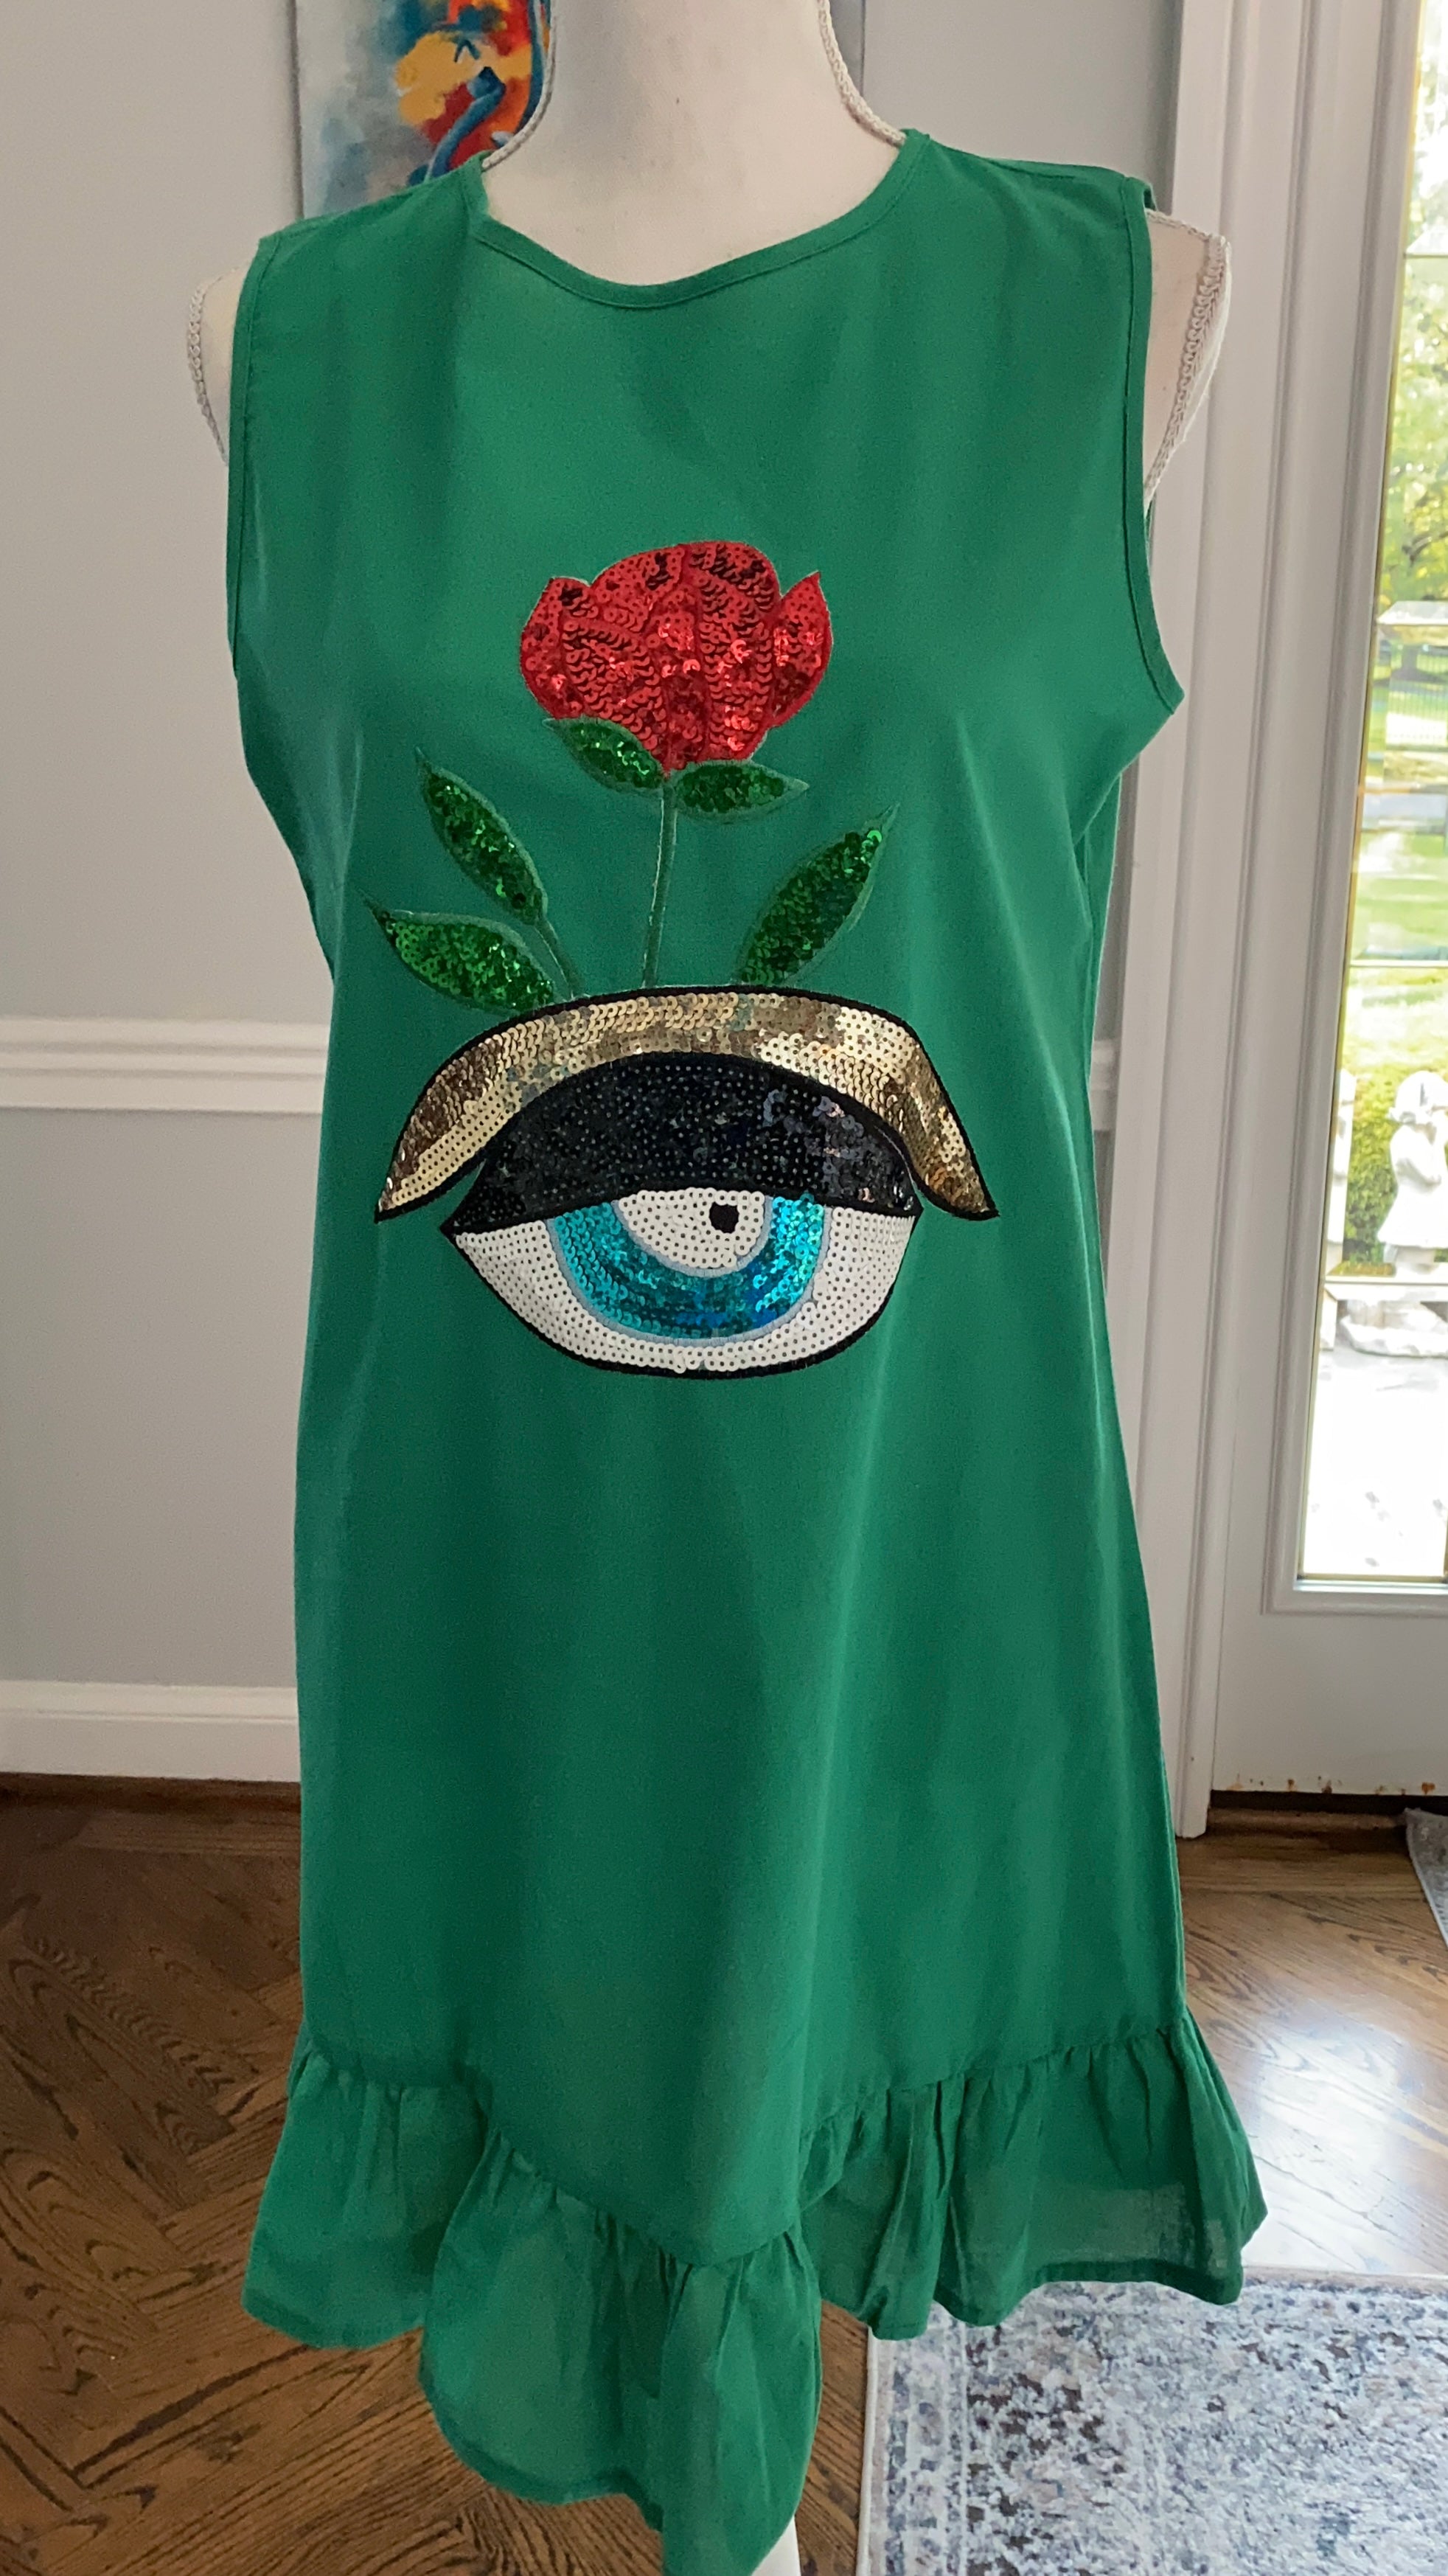 Green Linen dress with evil eye design